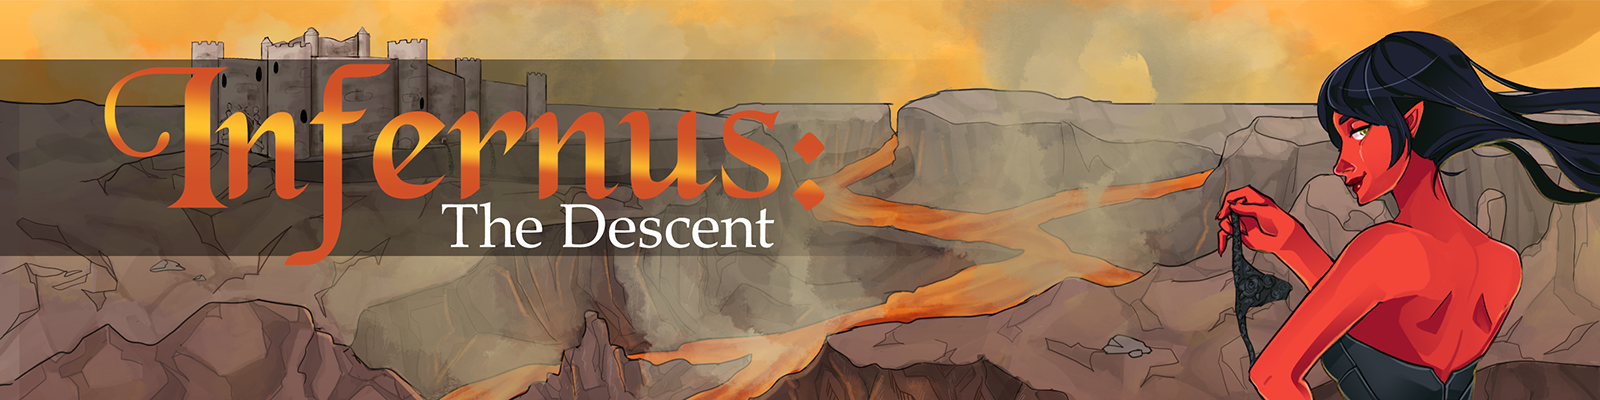 The Descent v.0.0.9 by Team Infernus eng